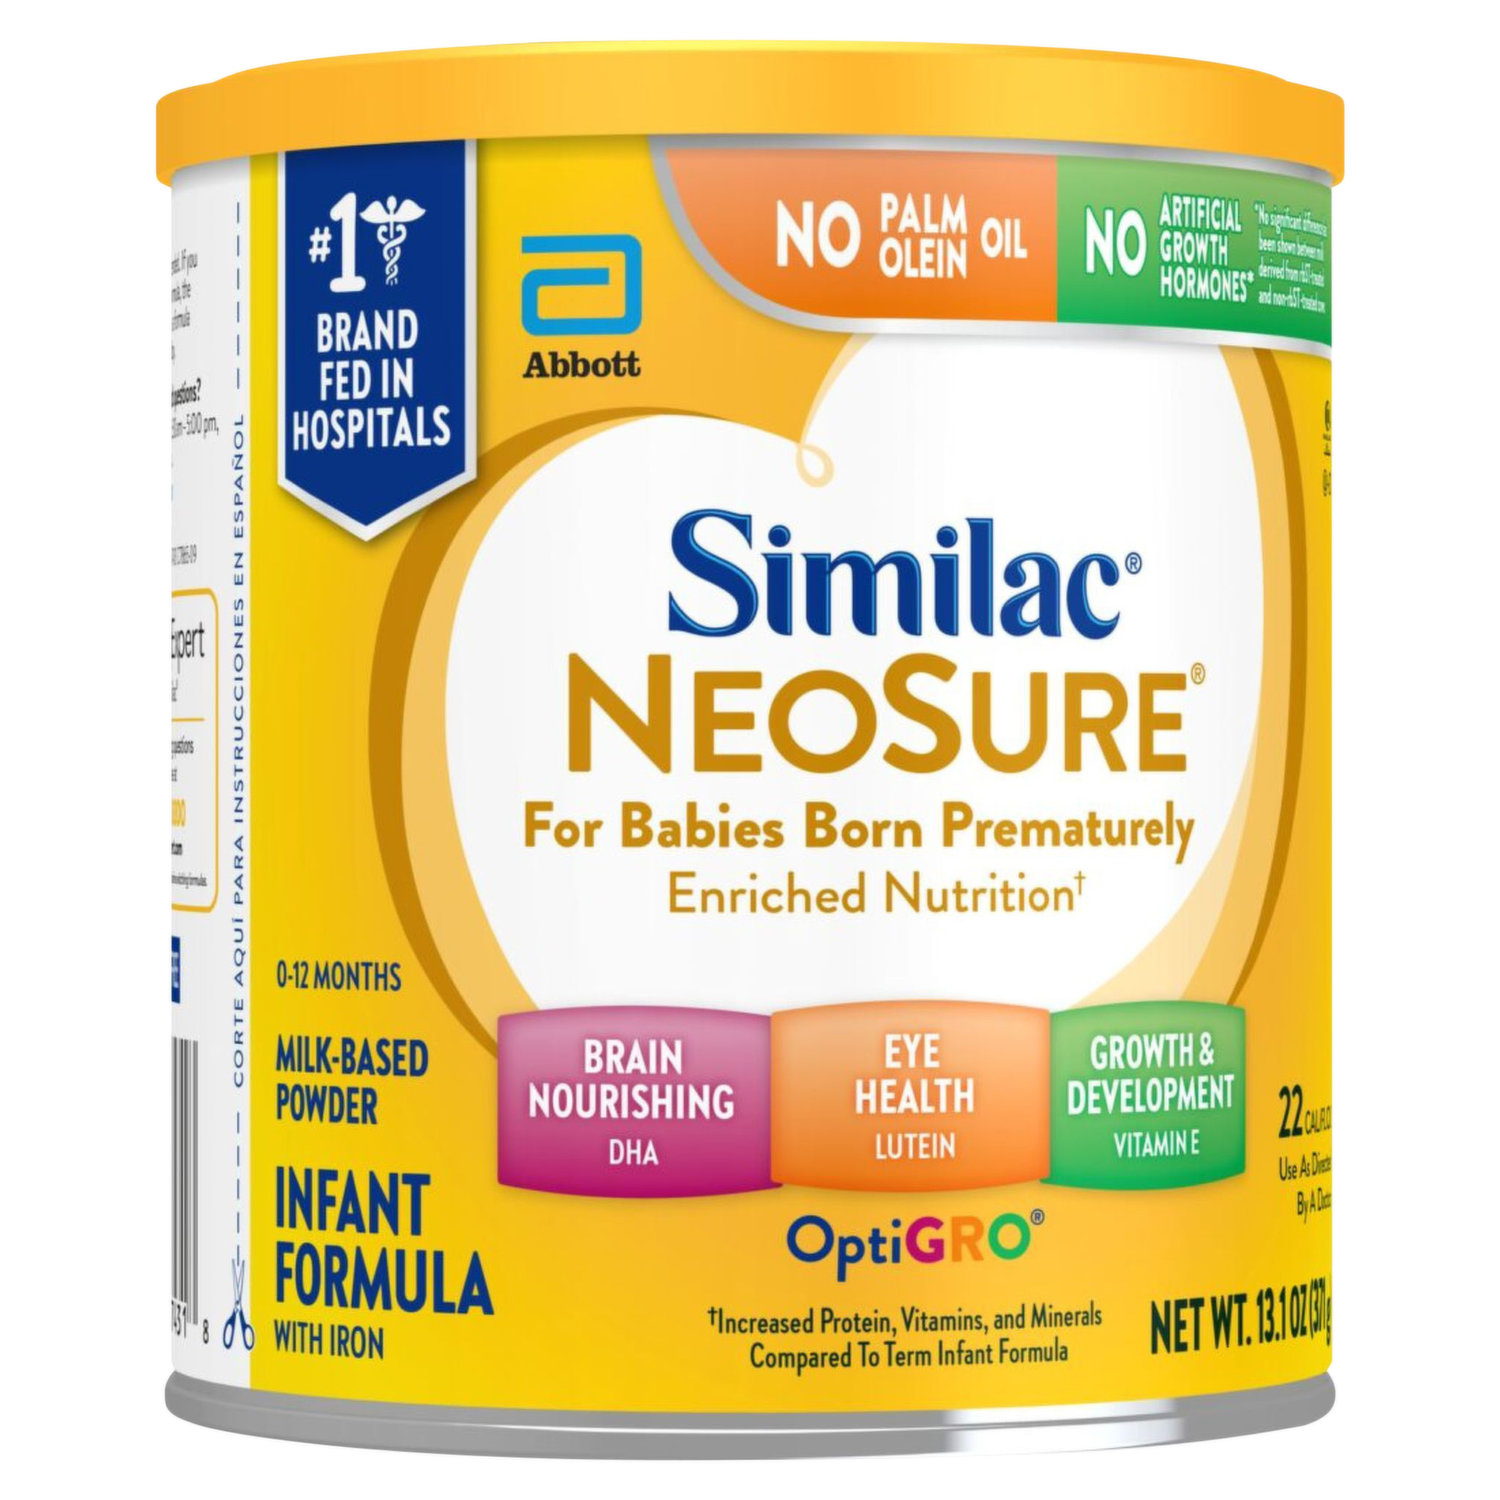 Similac Total Comfort® OptiGro Infant Formula Powder with Iron, 12.6 oz -  Dillons Food Stores